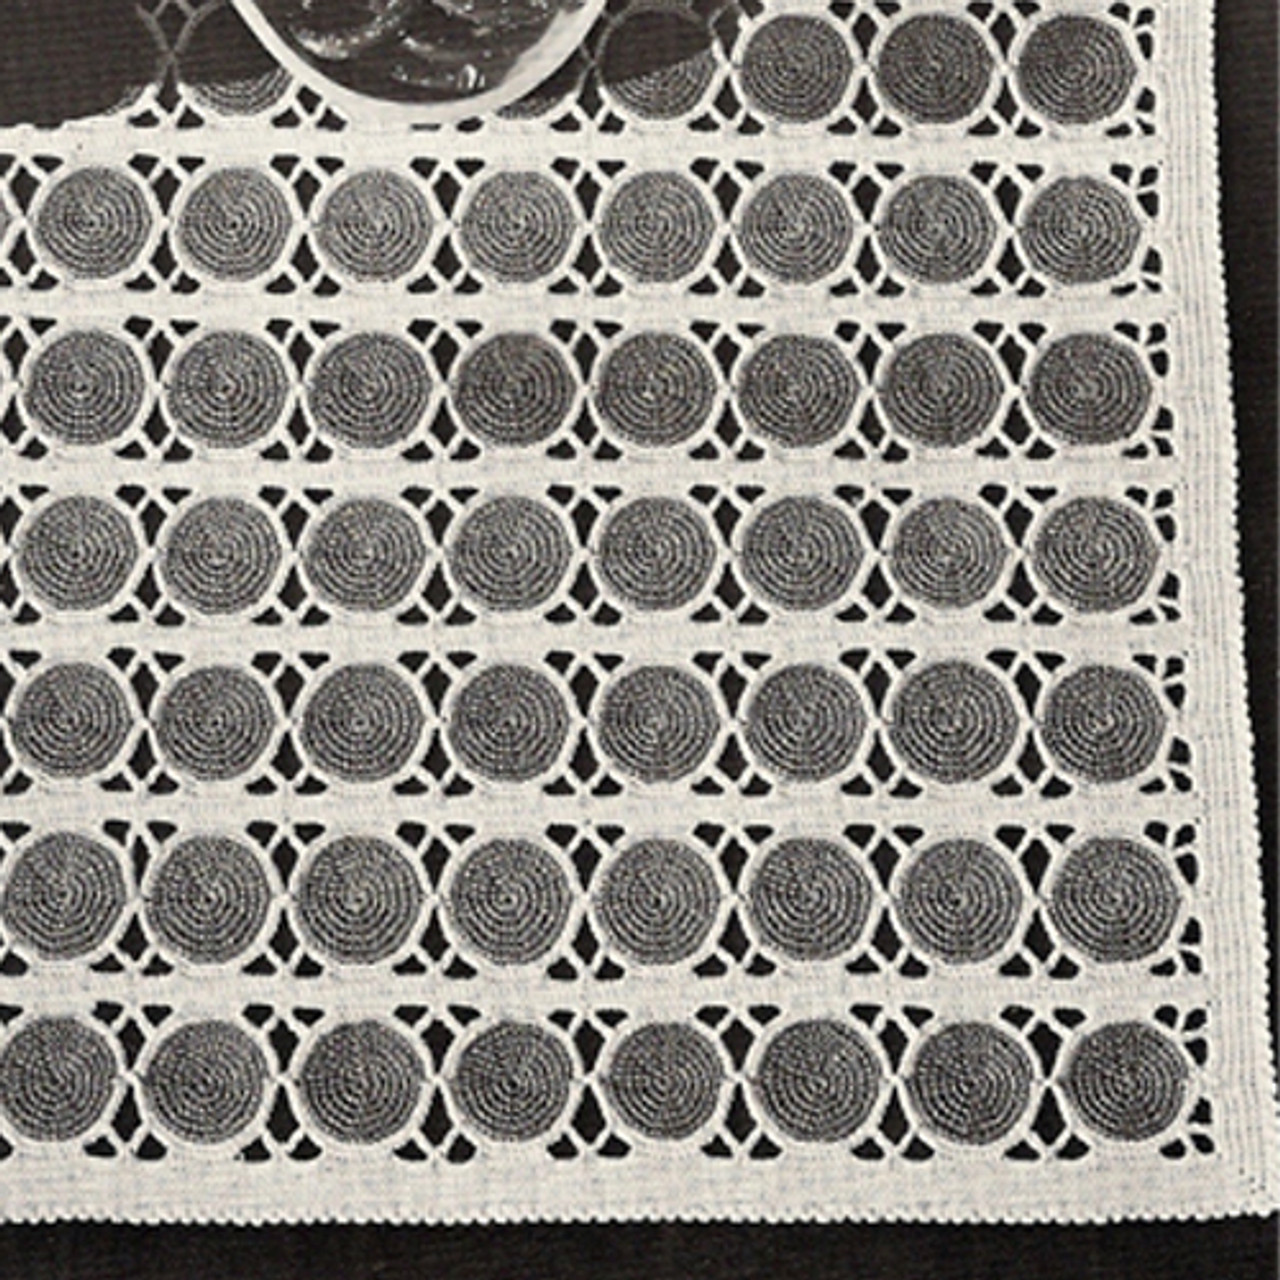 Crochet Place Mats Pattern of Circle Medallions